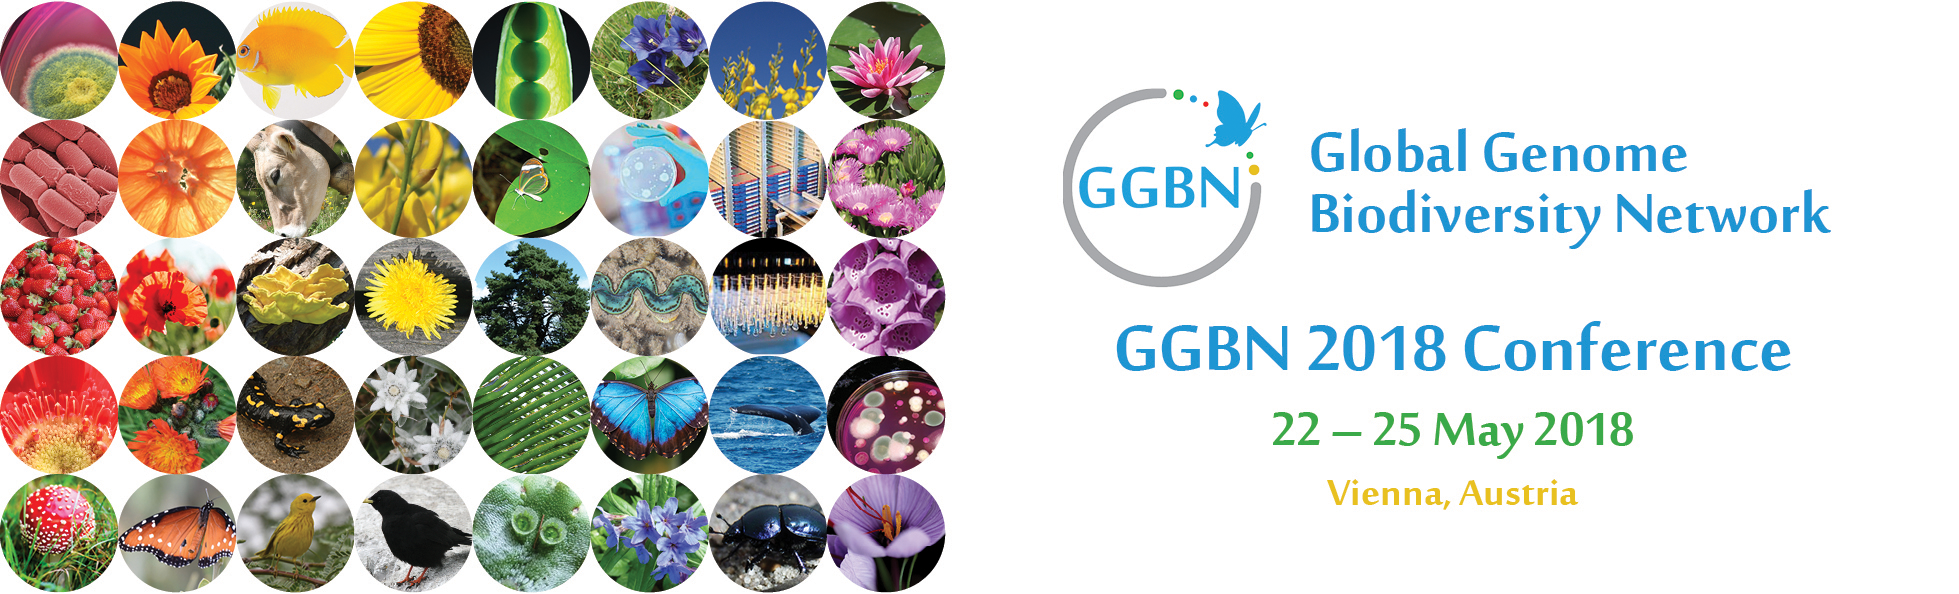 GGBN-Banner 940x285px v4.png